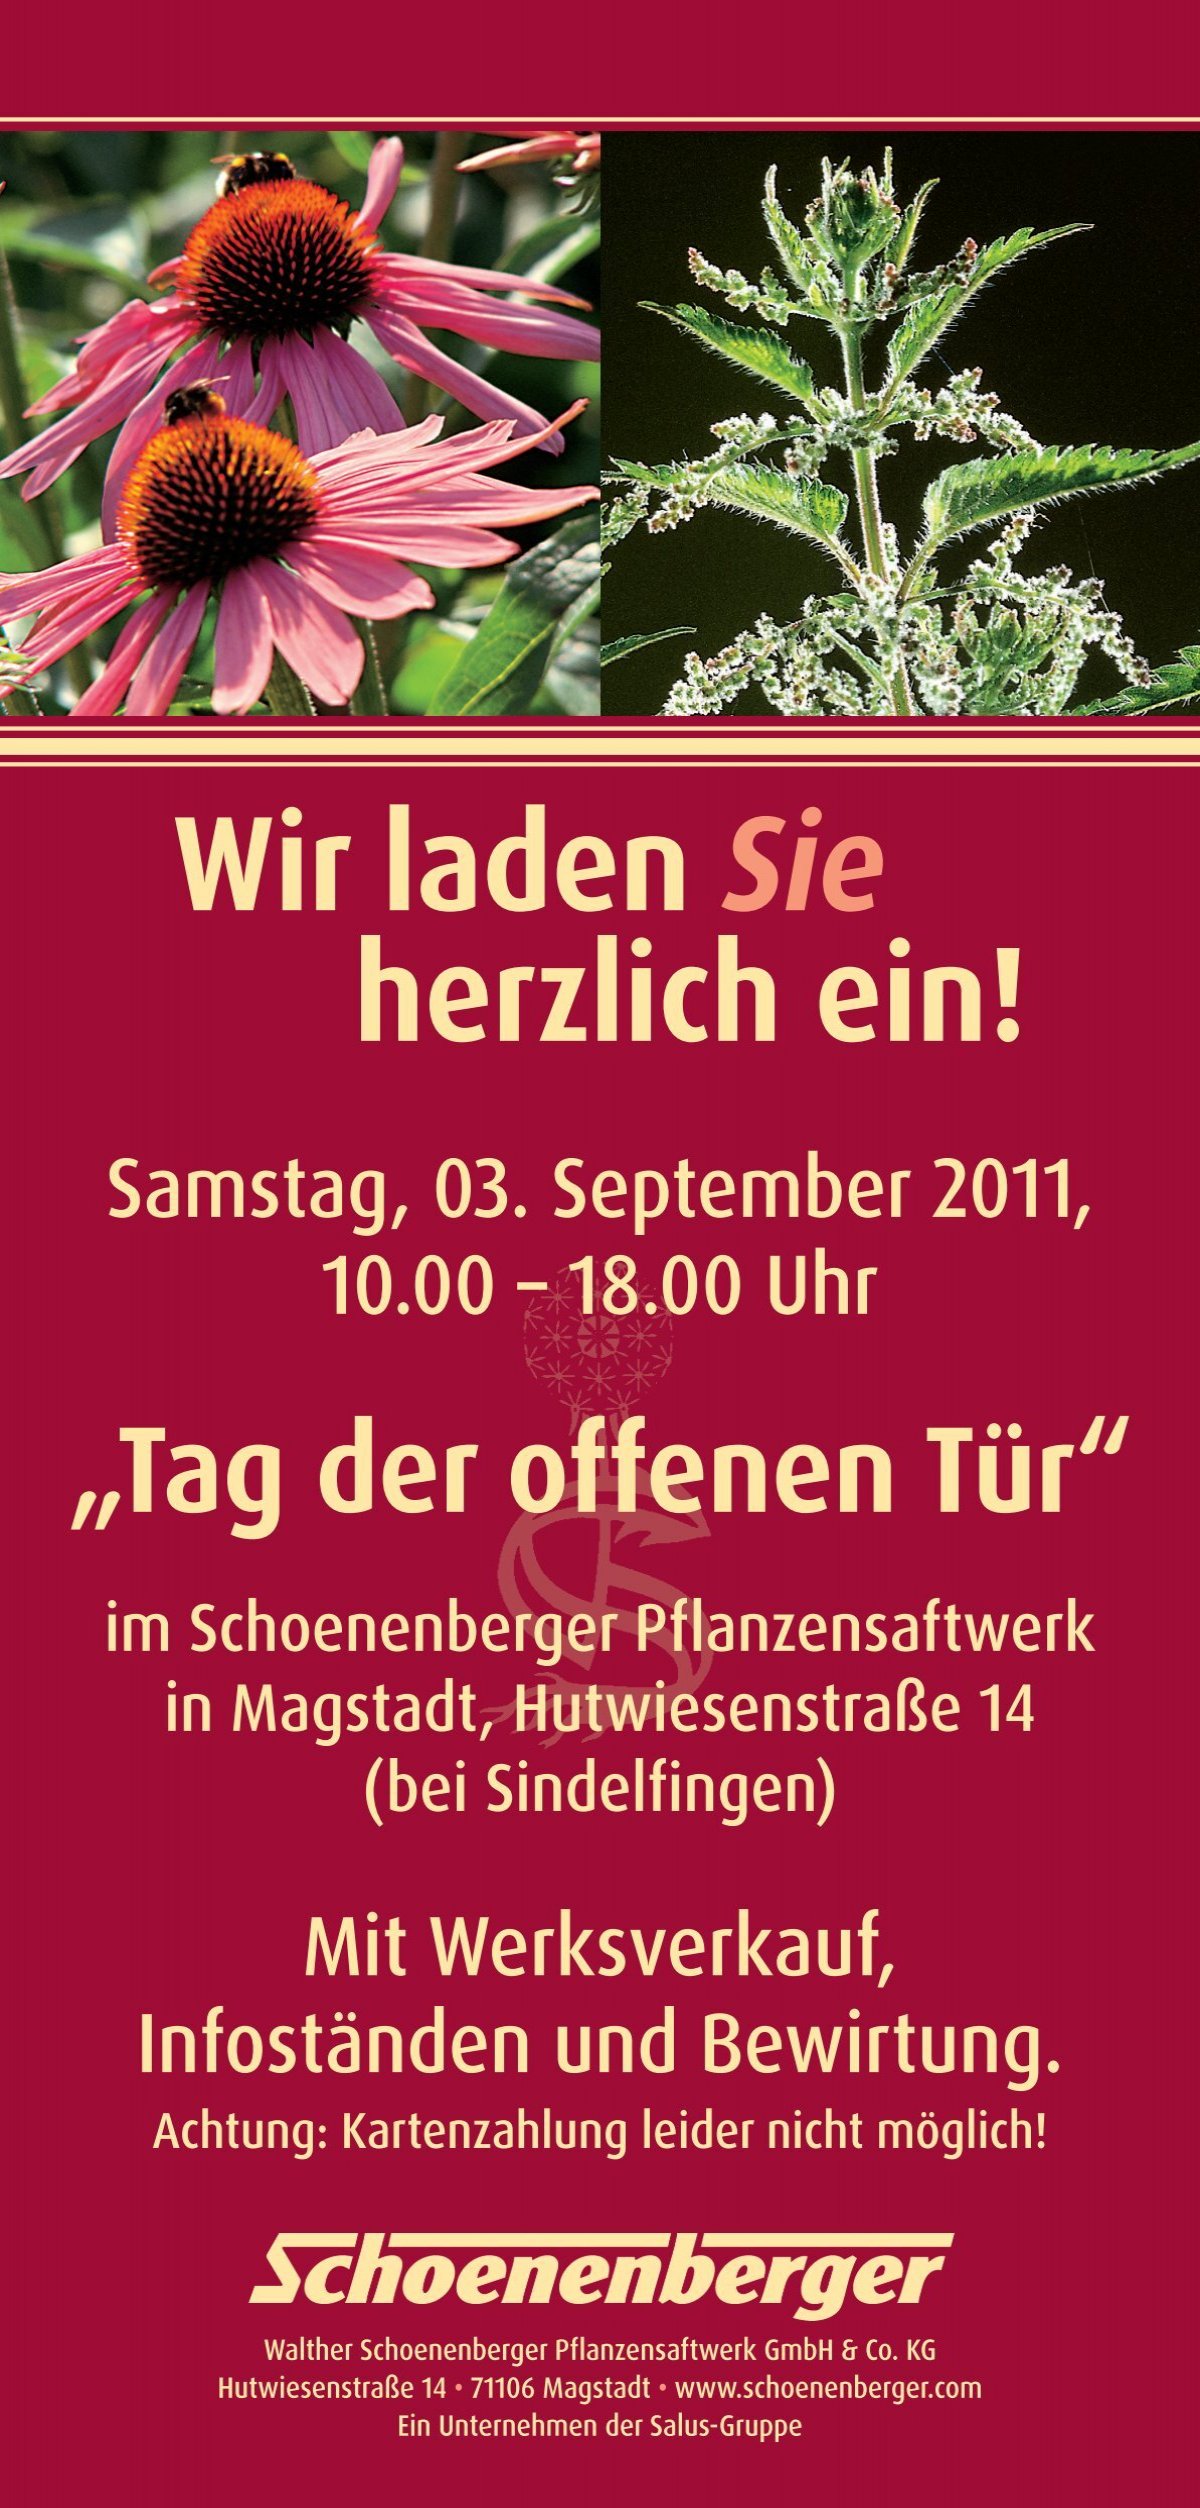 Info-Flyer als PDF downloaden - Schoenenberger Pflanzensaftwerk